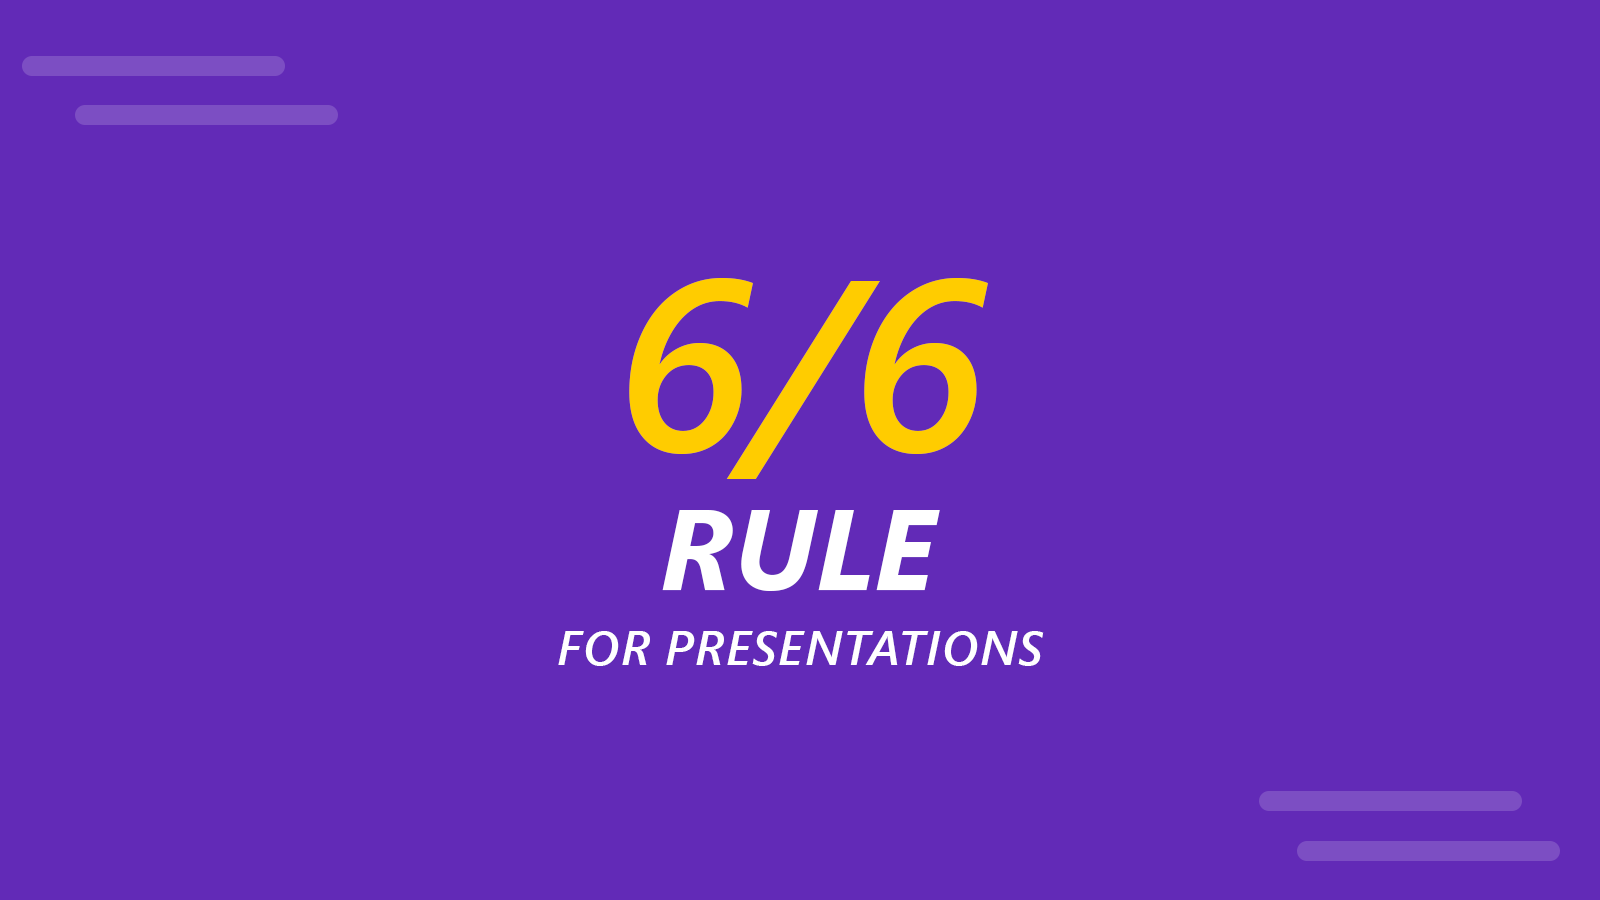 presentations rule 6x6